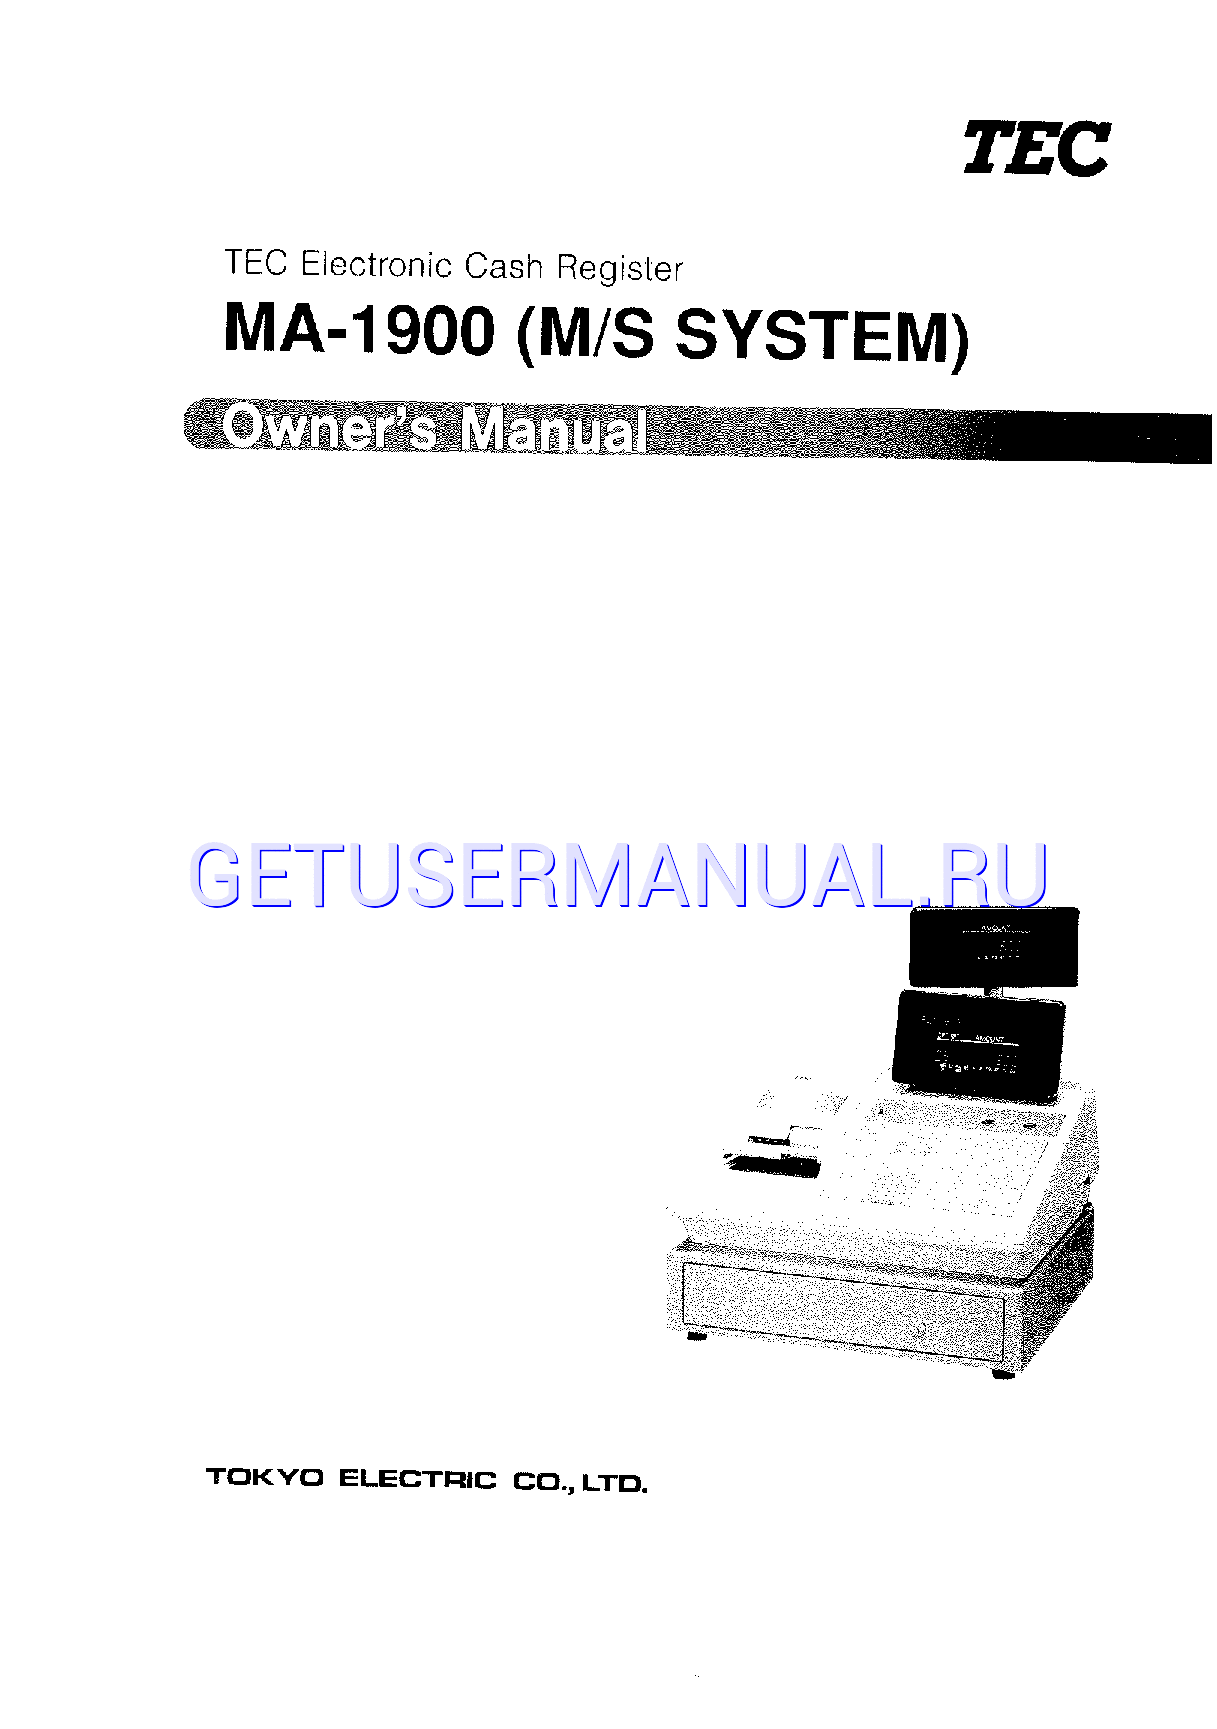 Toshiba Cash Register TEC MA1900 Owner's Manual download free